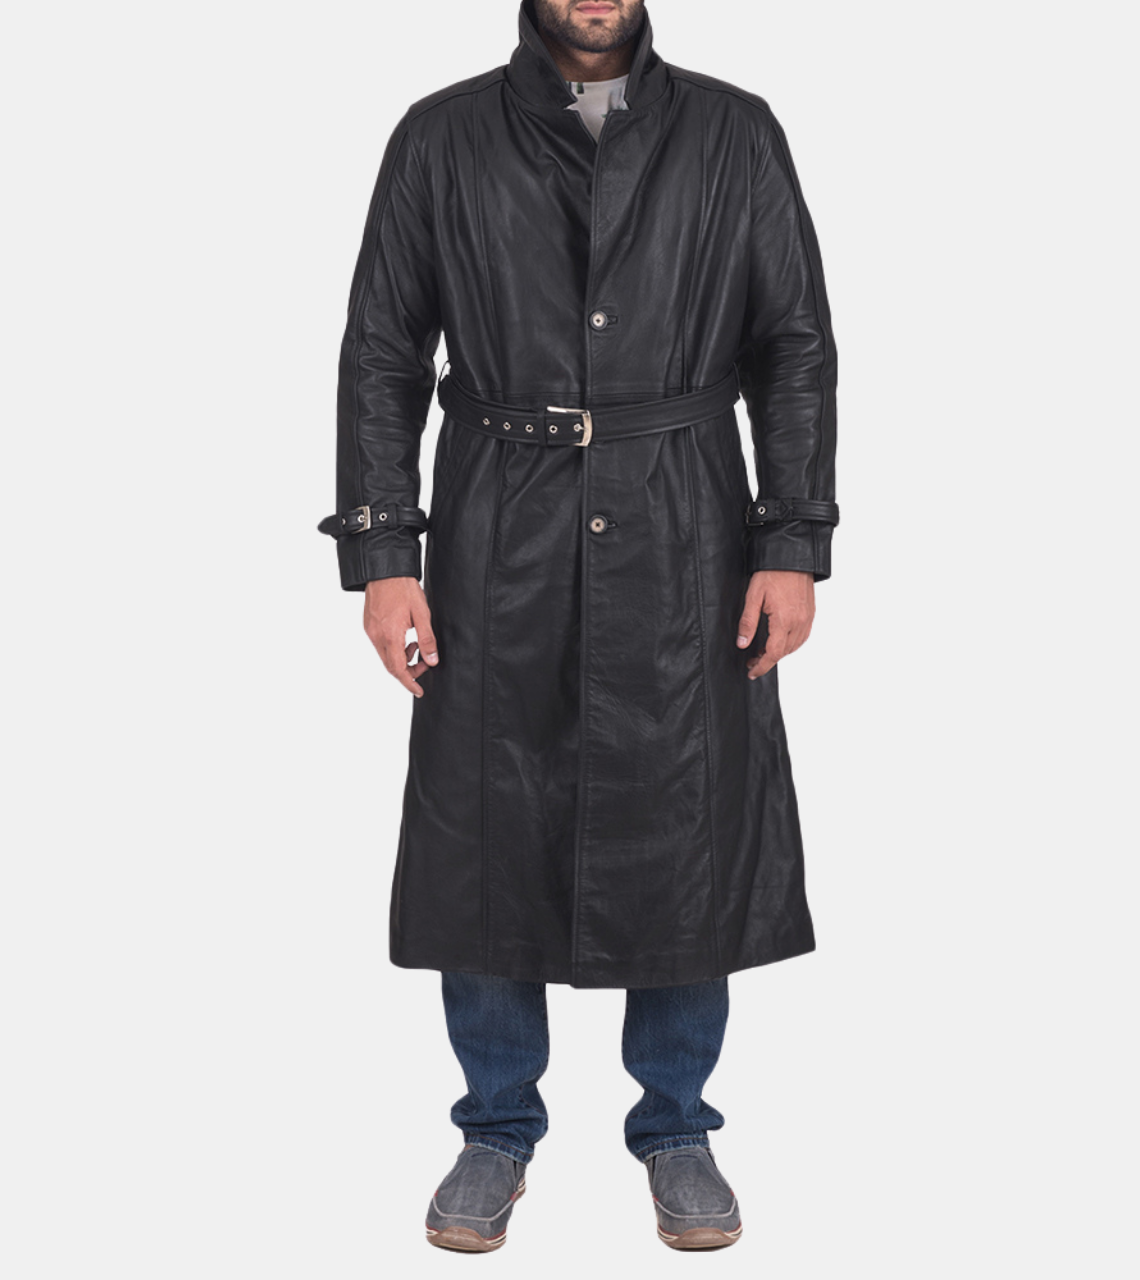 Dion Men's Black Distressed Leather Coat